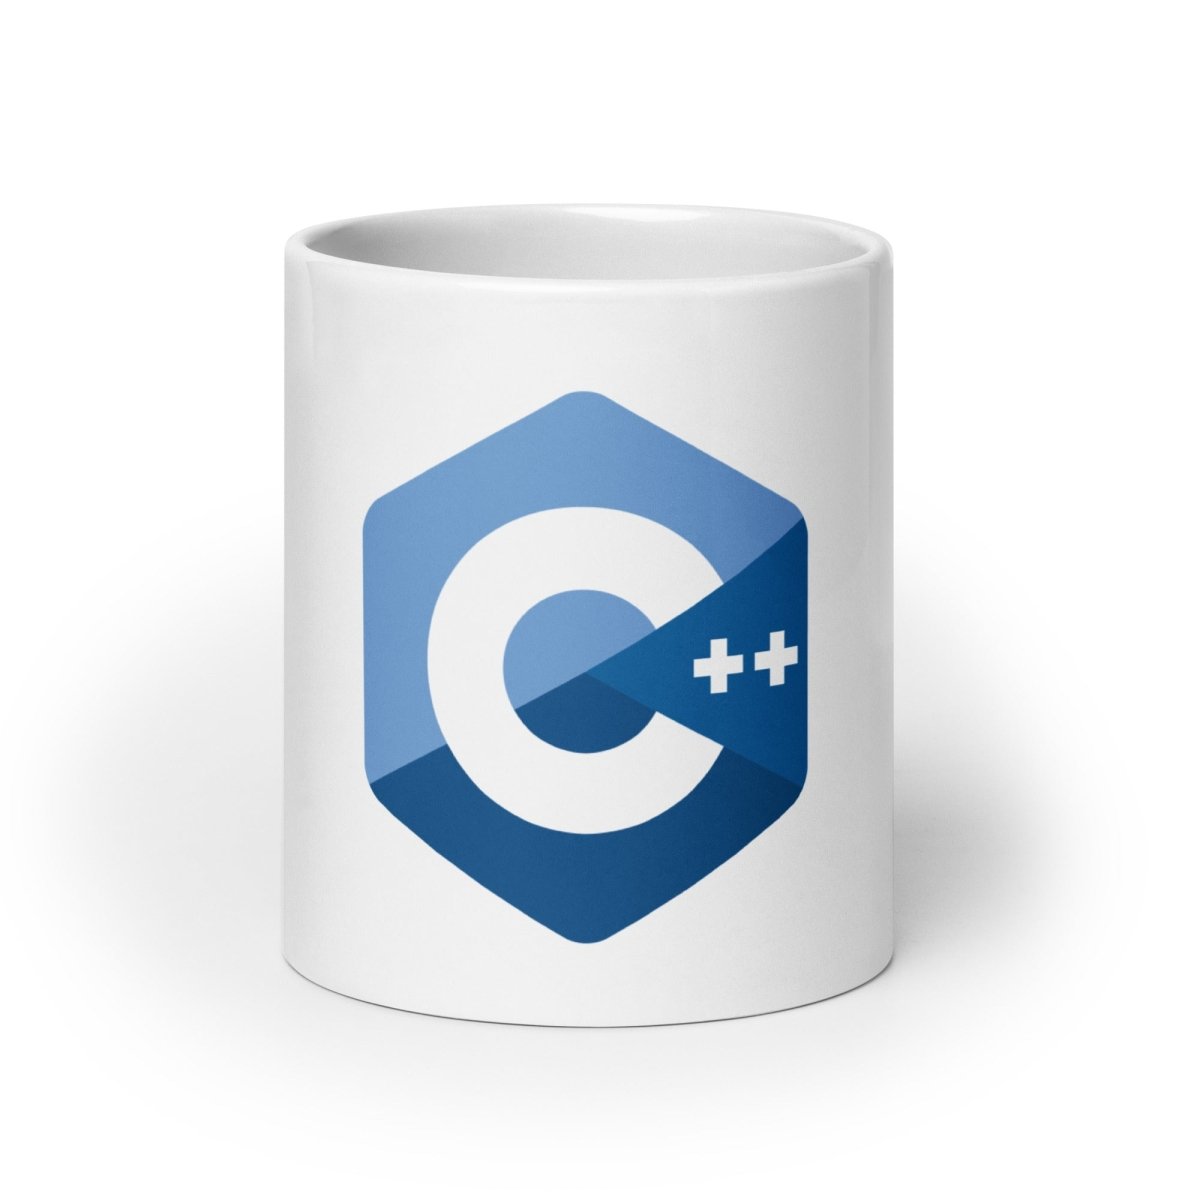 C++ Logo White Glossy Mug - 20 oz - AI Store